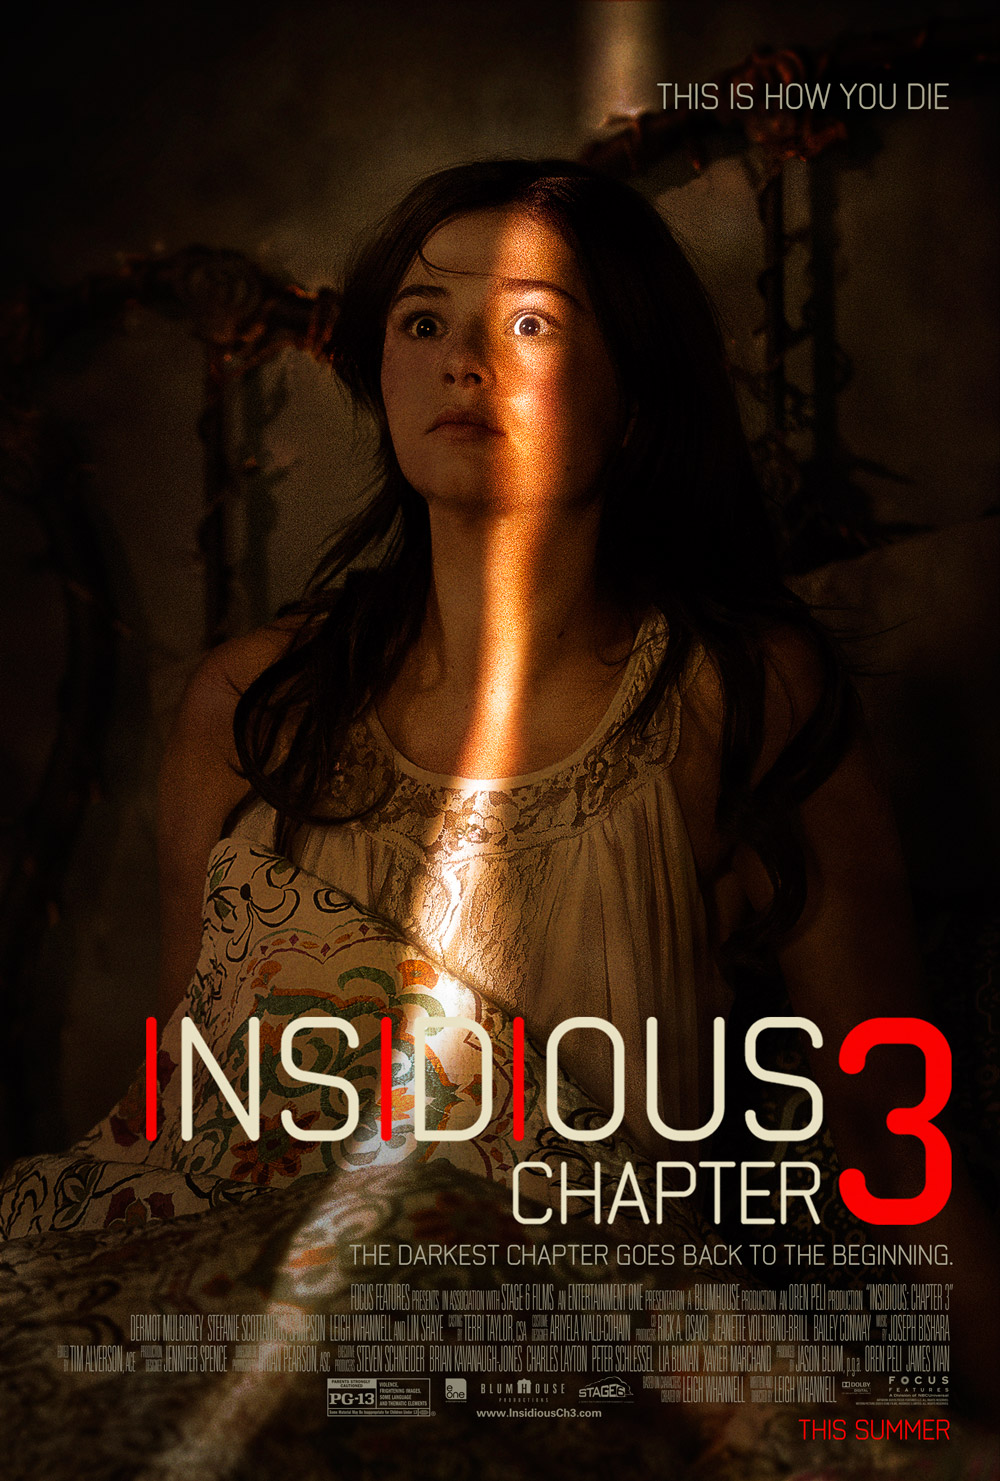 Sobrenatural: Capítulo 3 (Insidious: Chapter 3) ganha novo trailer e pôster